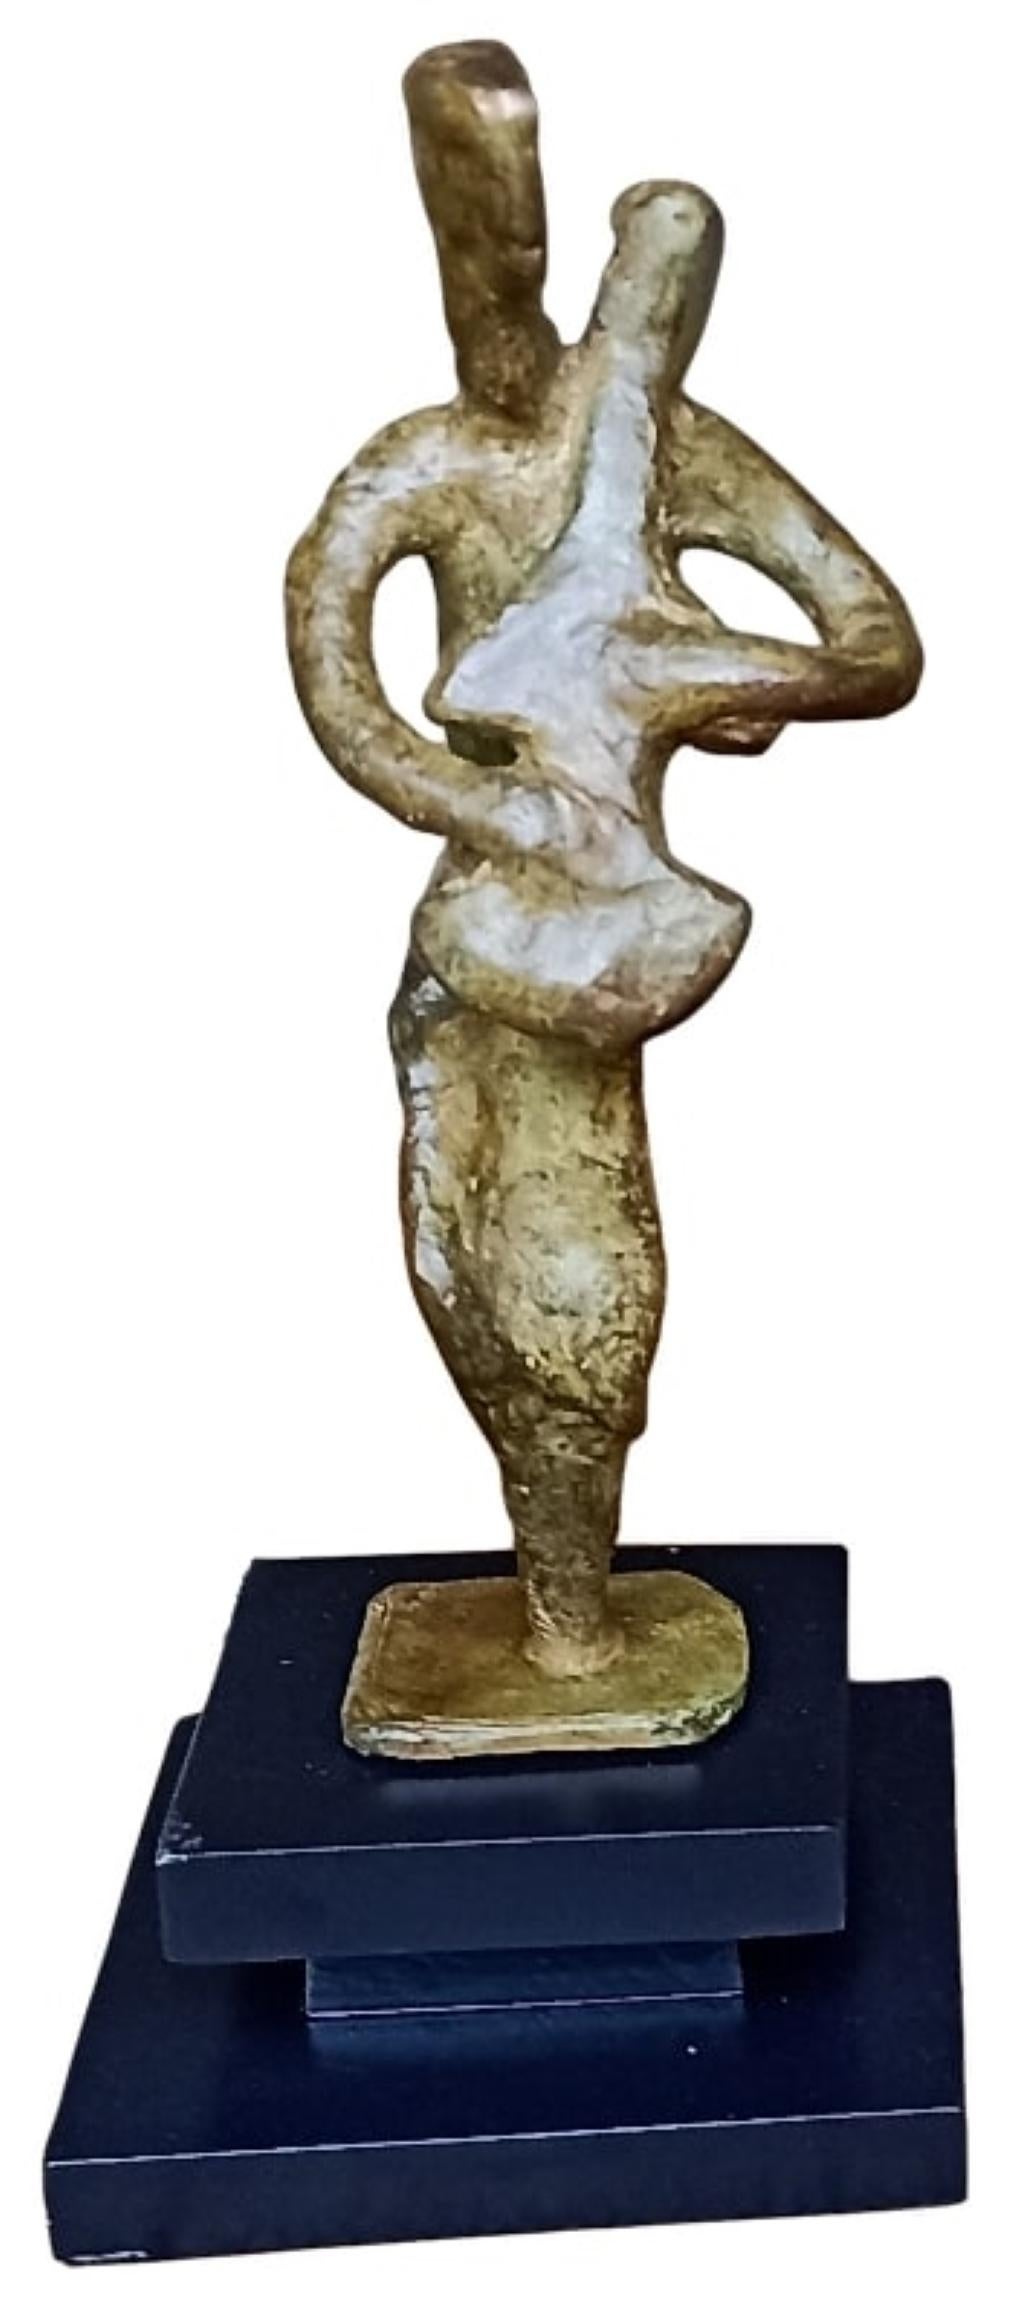 Tushar Kanti Das Roy Figurative Sculpture - Musician, Bronze Sculpture, Figurative Brownish by Contemporary Artist“In Stock”